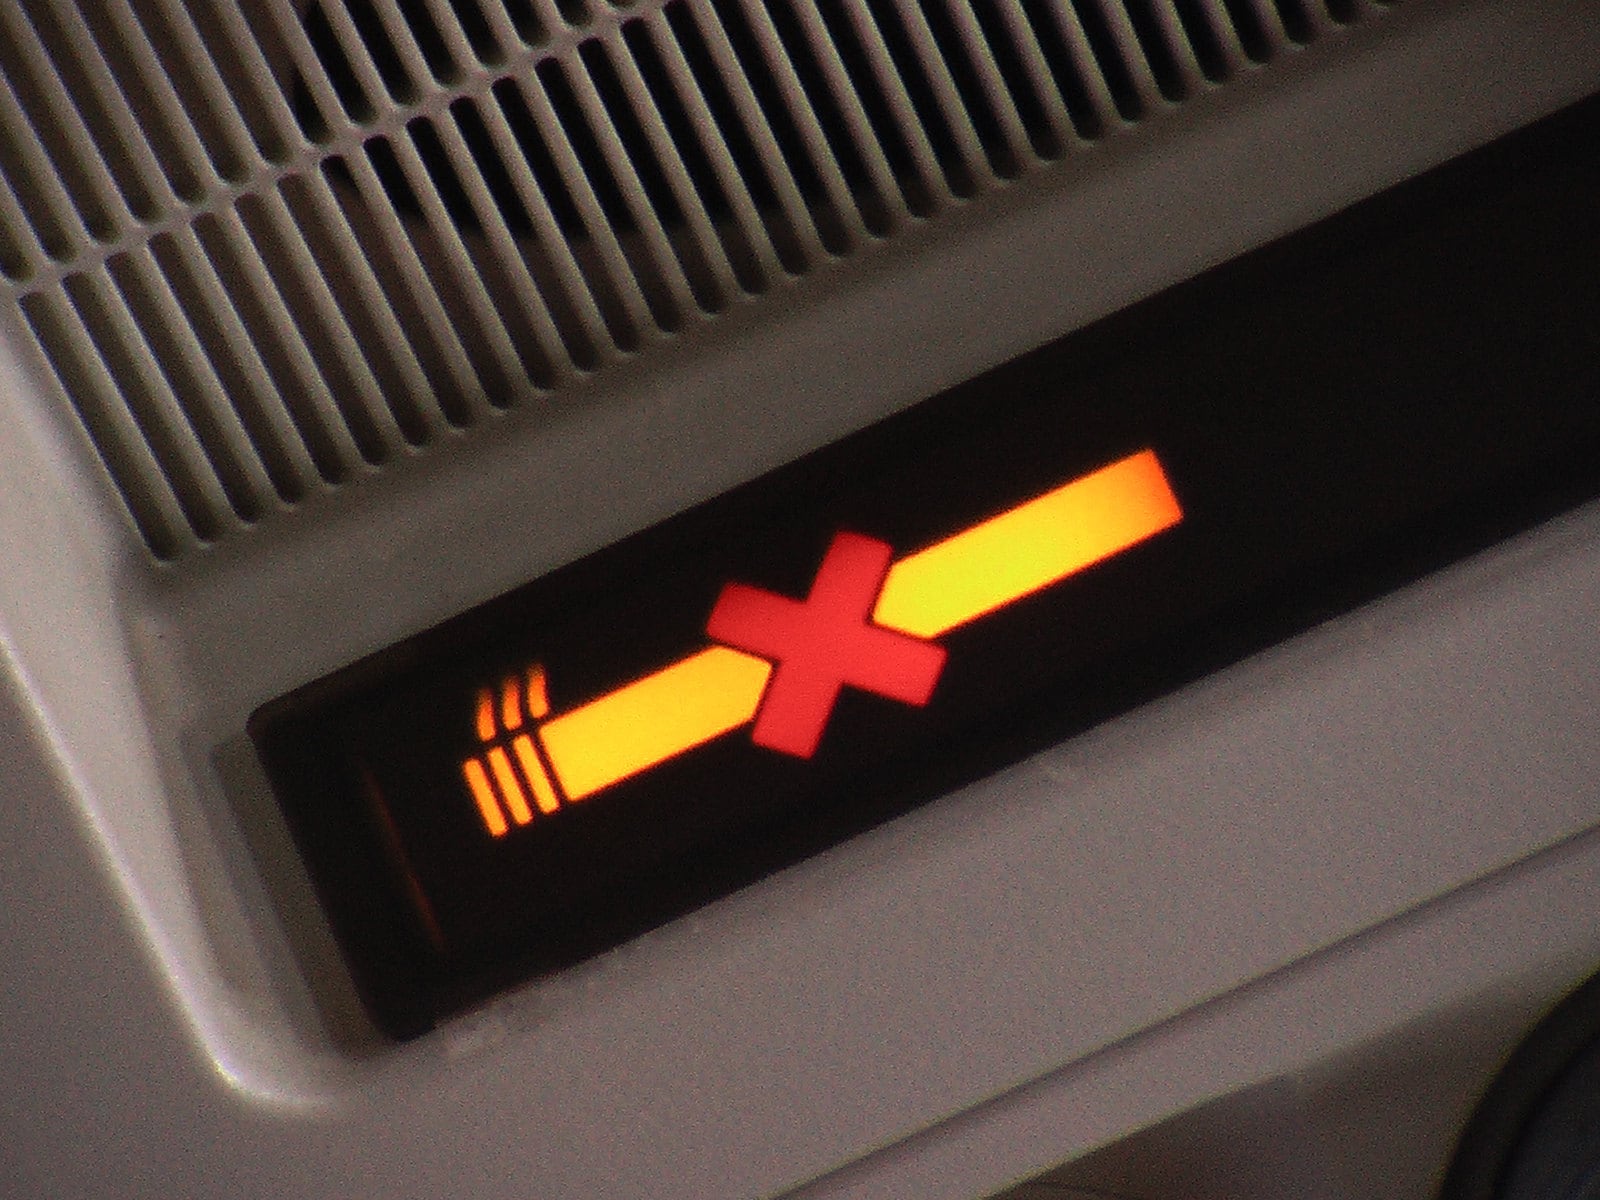 No-smoking sign on an airplane